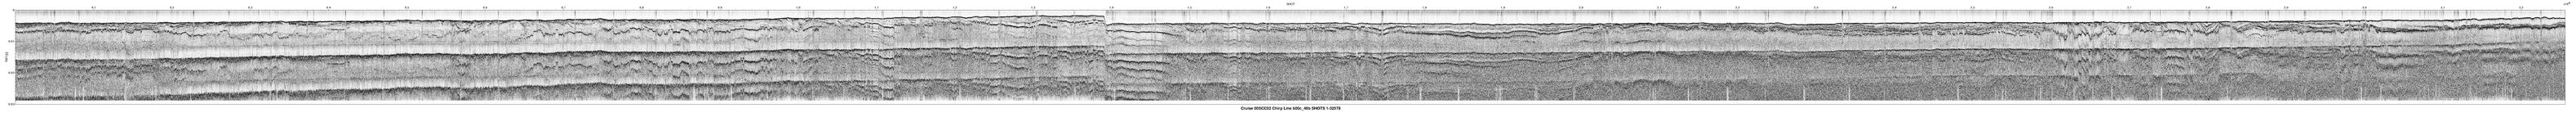 00SCC02 b00c_48b seismic profile image